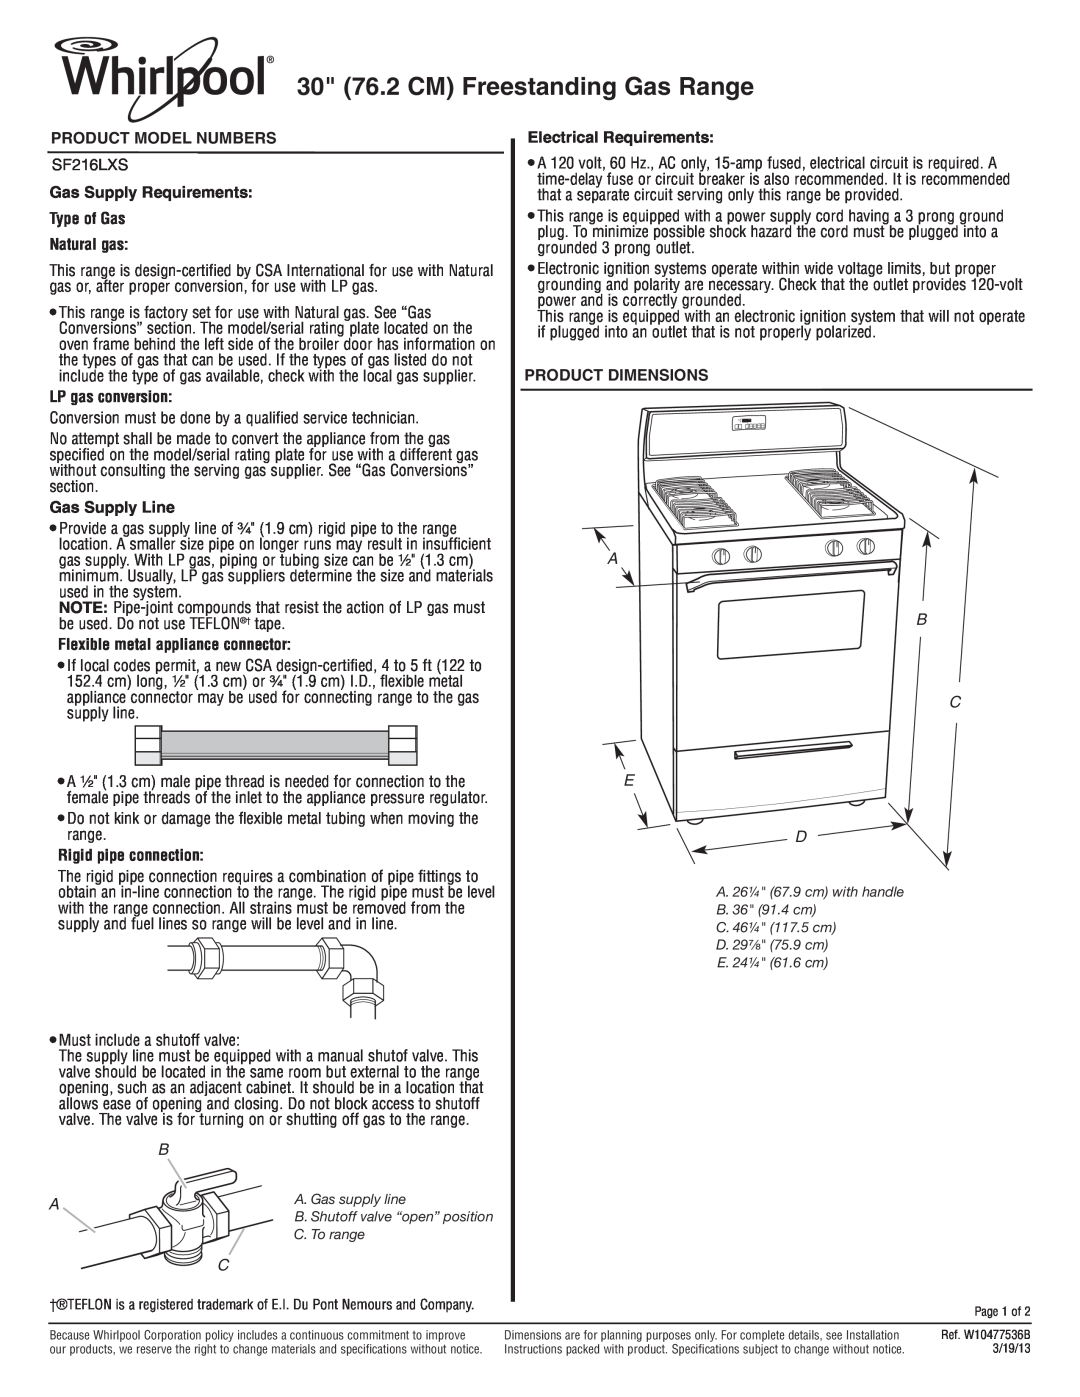 Whirlpool SF216LXS manual Cooktop Parts, Illus. Part No. No. DESCRIPTION 